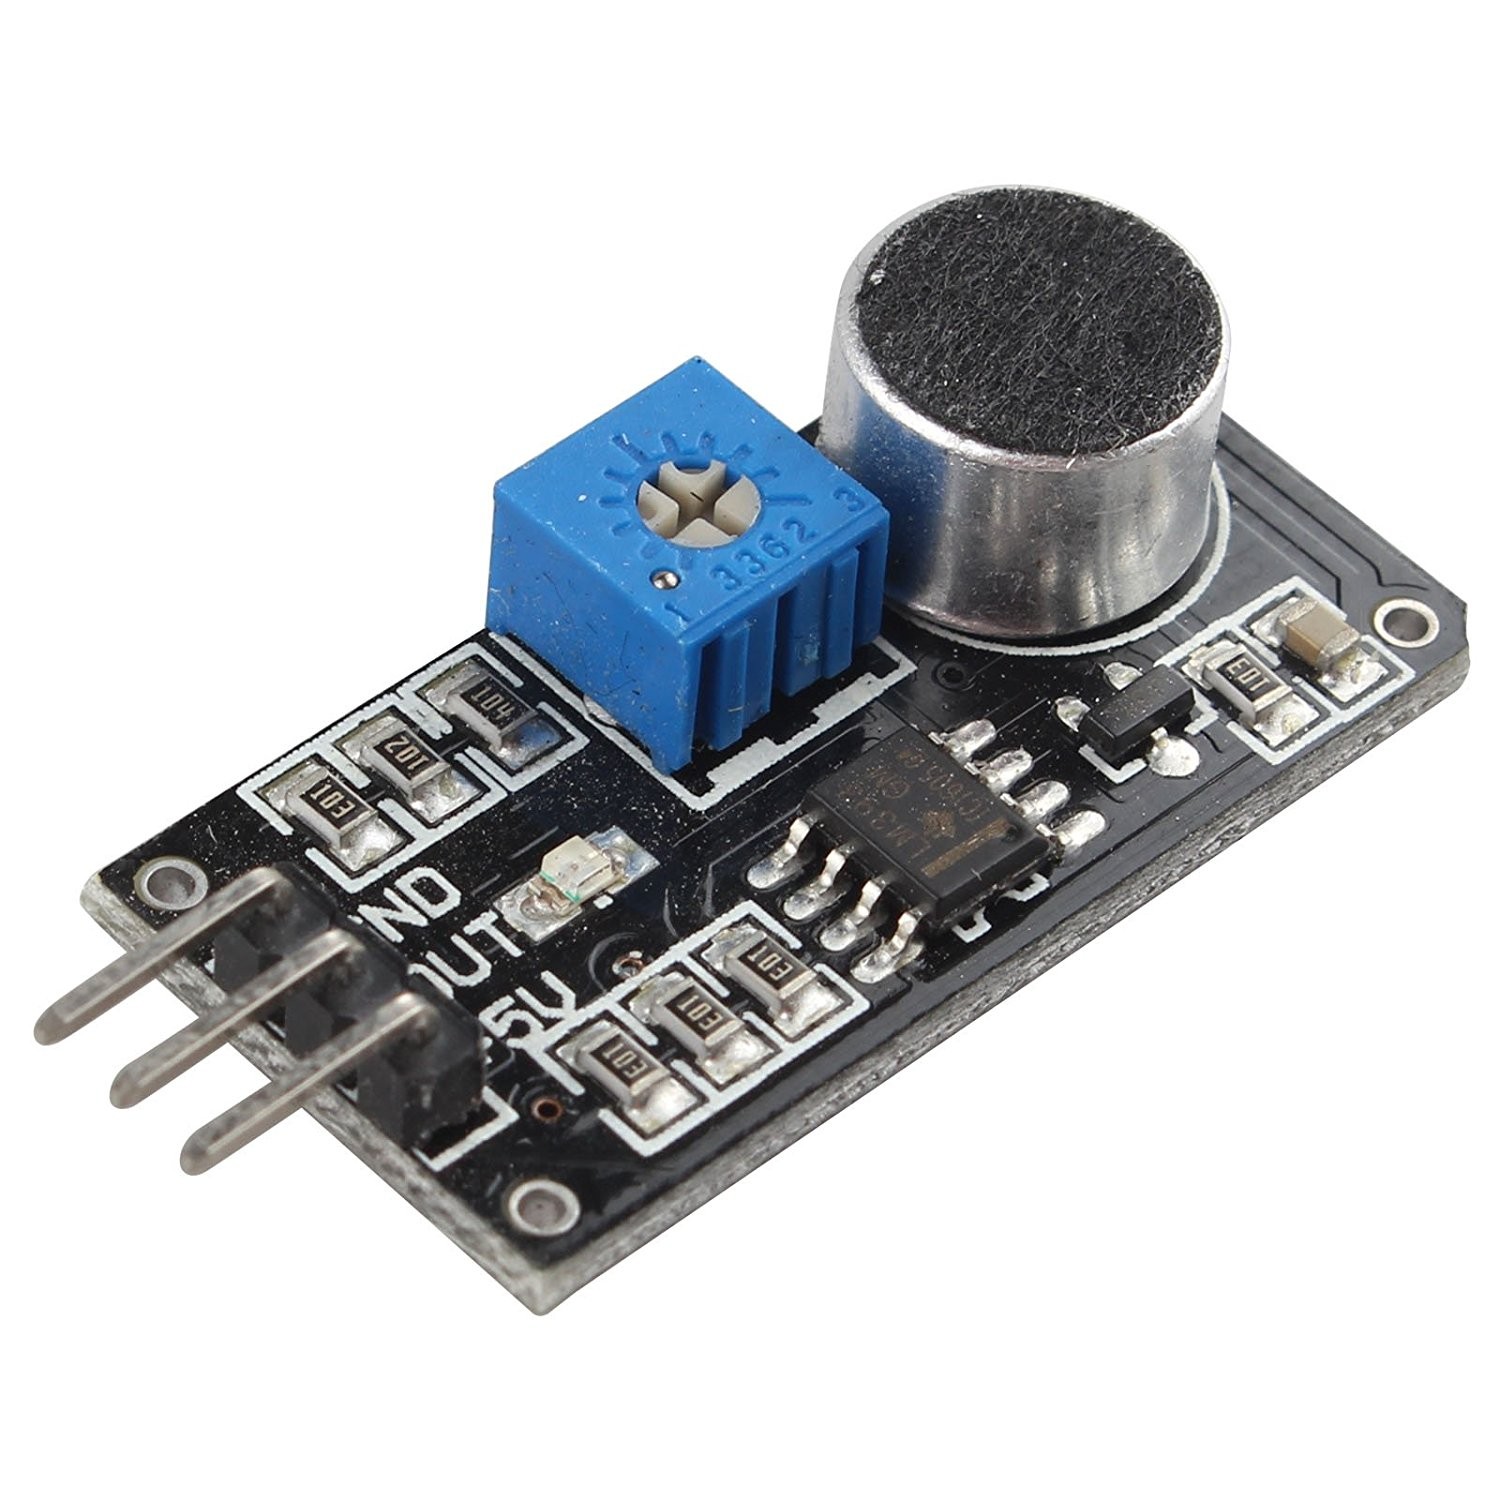 Detector de sonido Chip LM393 Modulo Microfono para Arduino |